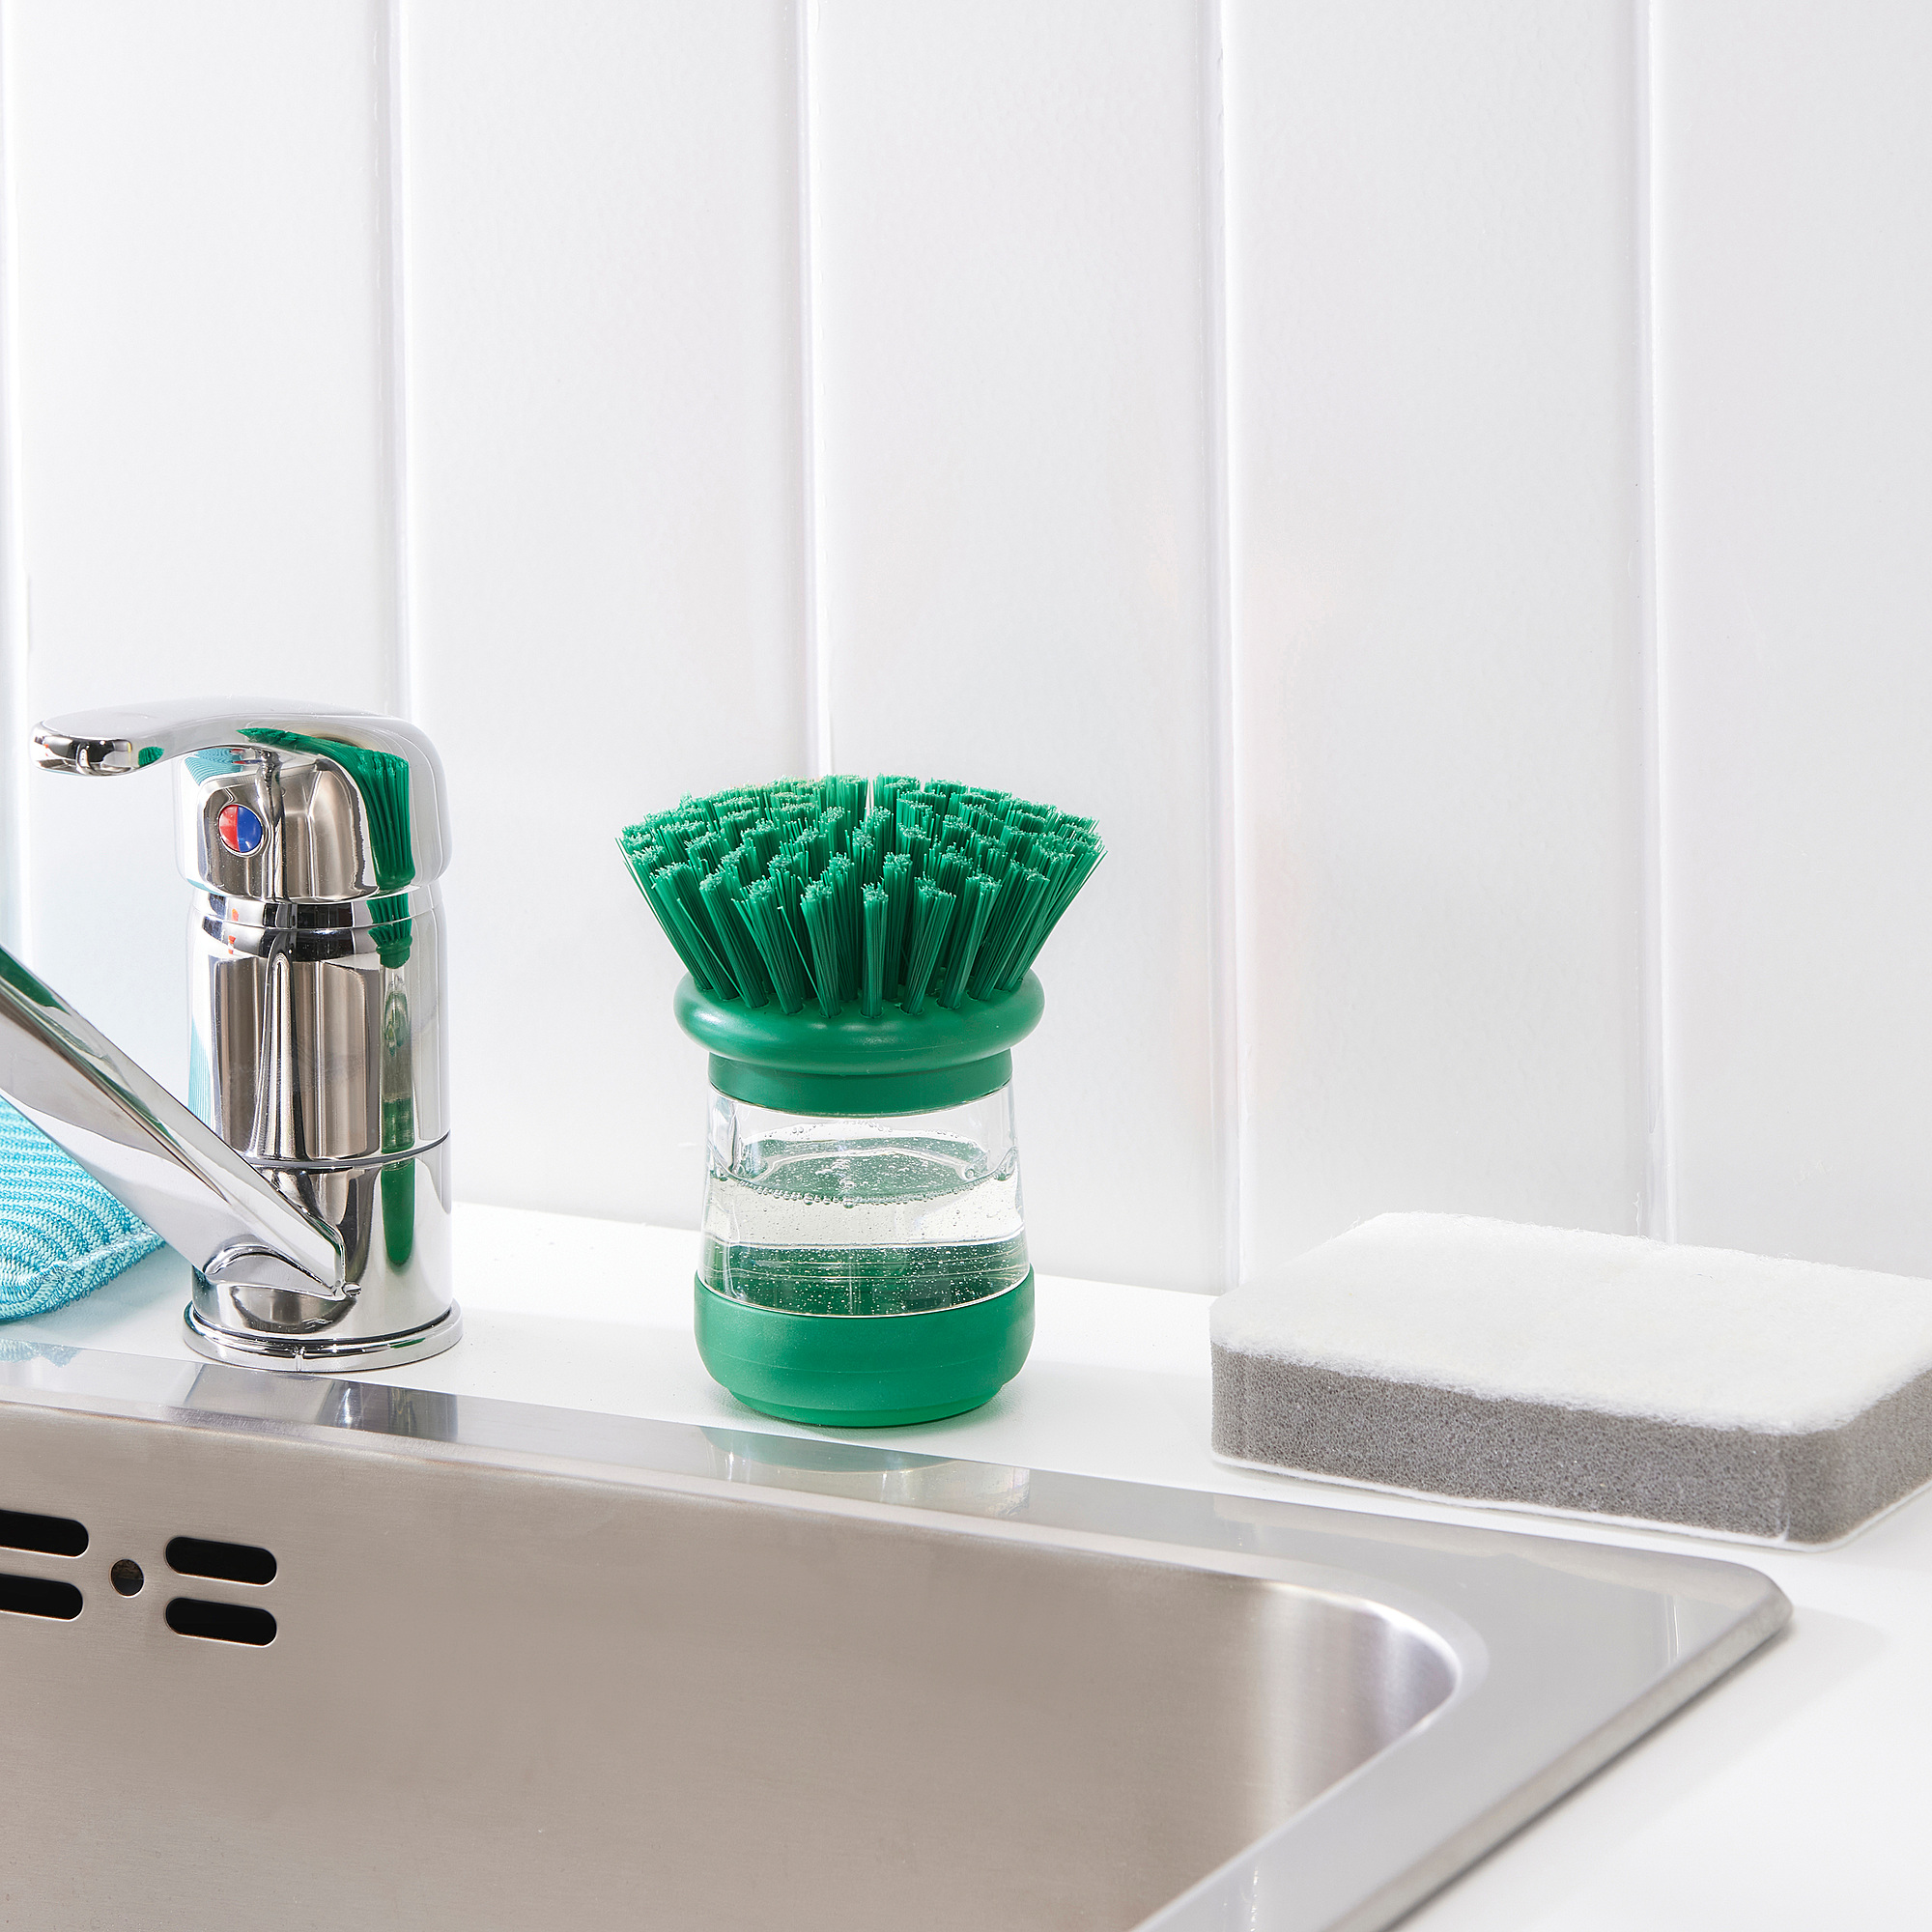 VIDEVECKMAL dish-washing brush with dispenser